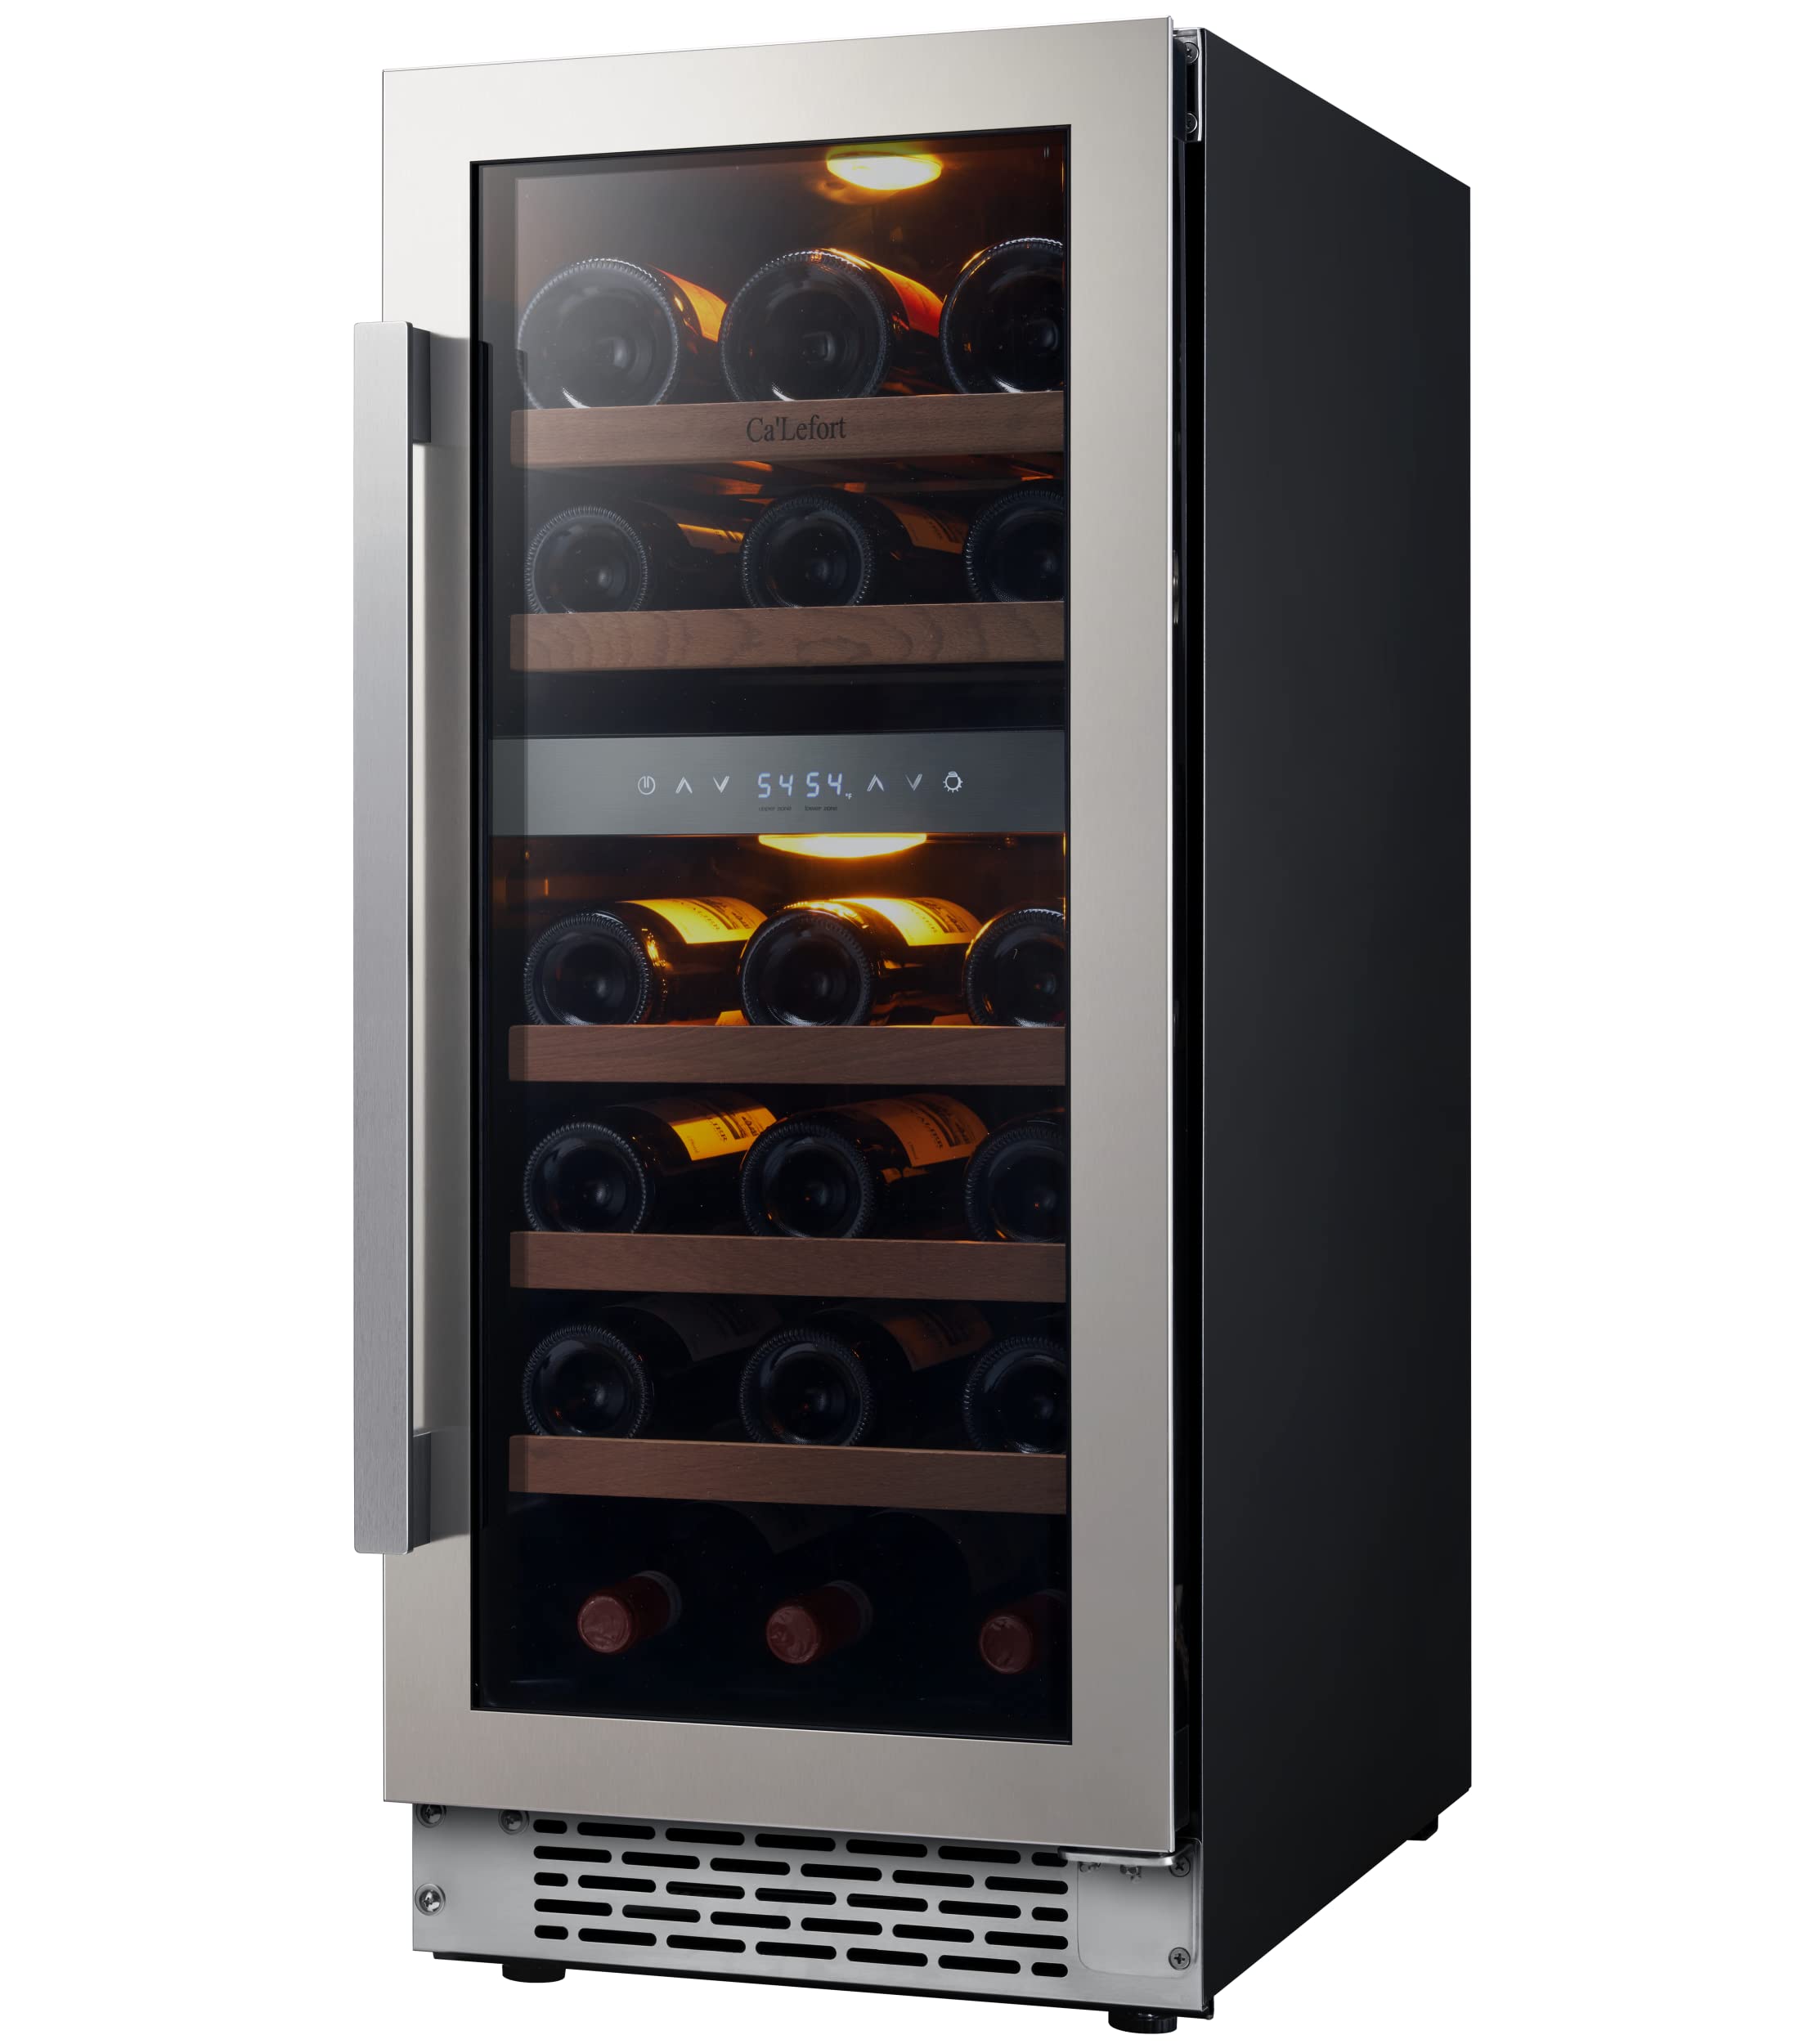 caLefort 15 Inch Wine cooler, 28 Bottle Mini Wine Fridge Dual Zone Fast cooling Low Noise, Professional Wine cooler Refrigerator